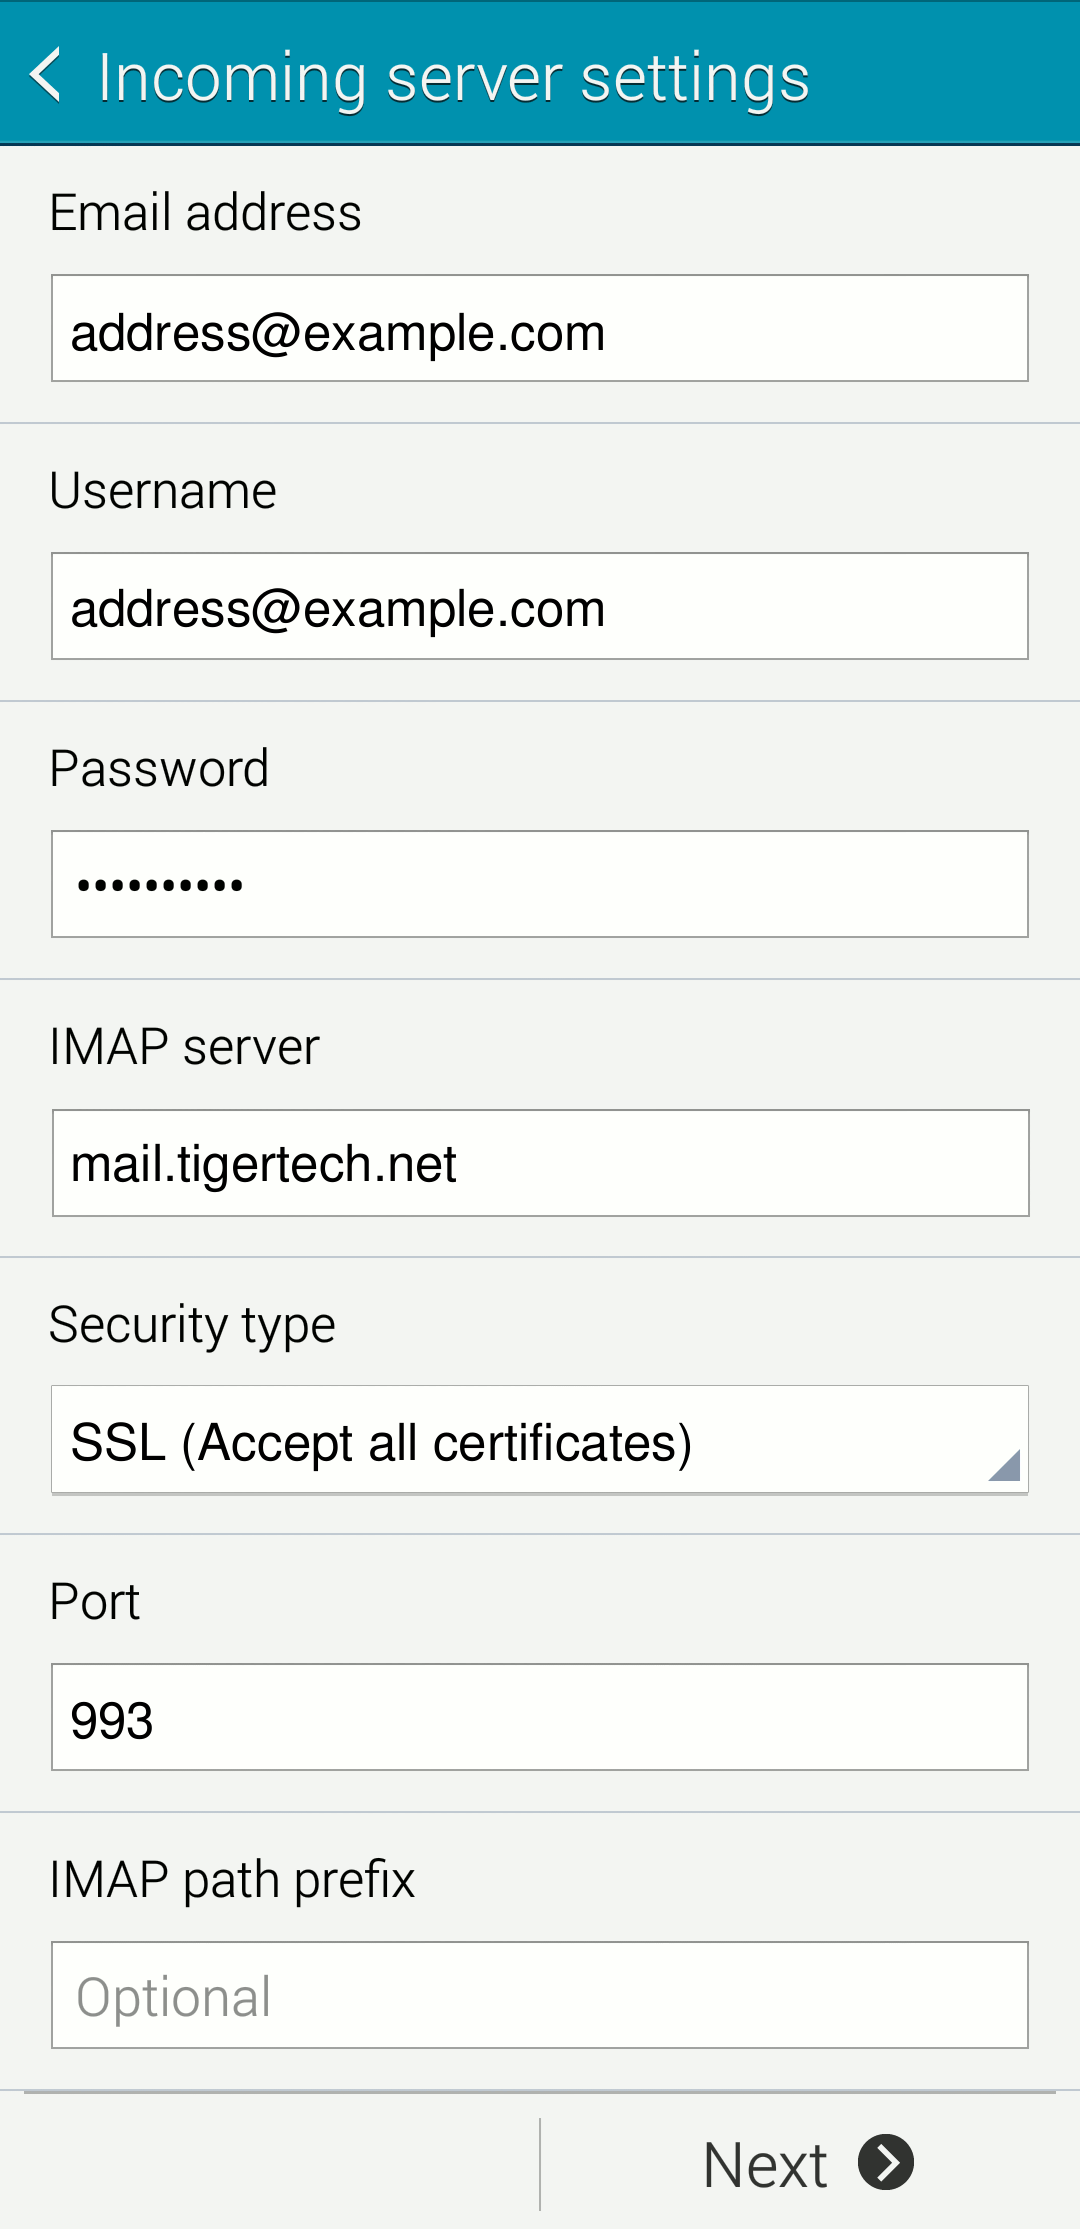 How do I verify my email address on my phone?